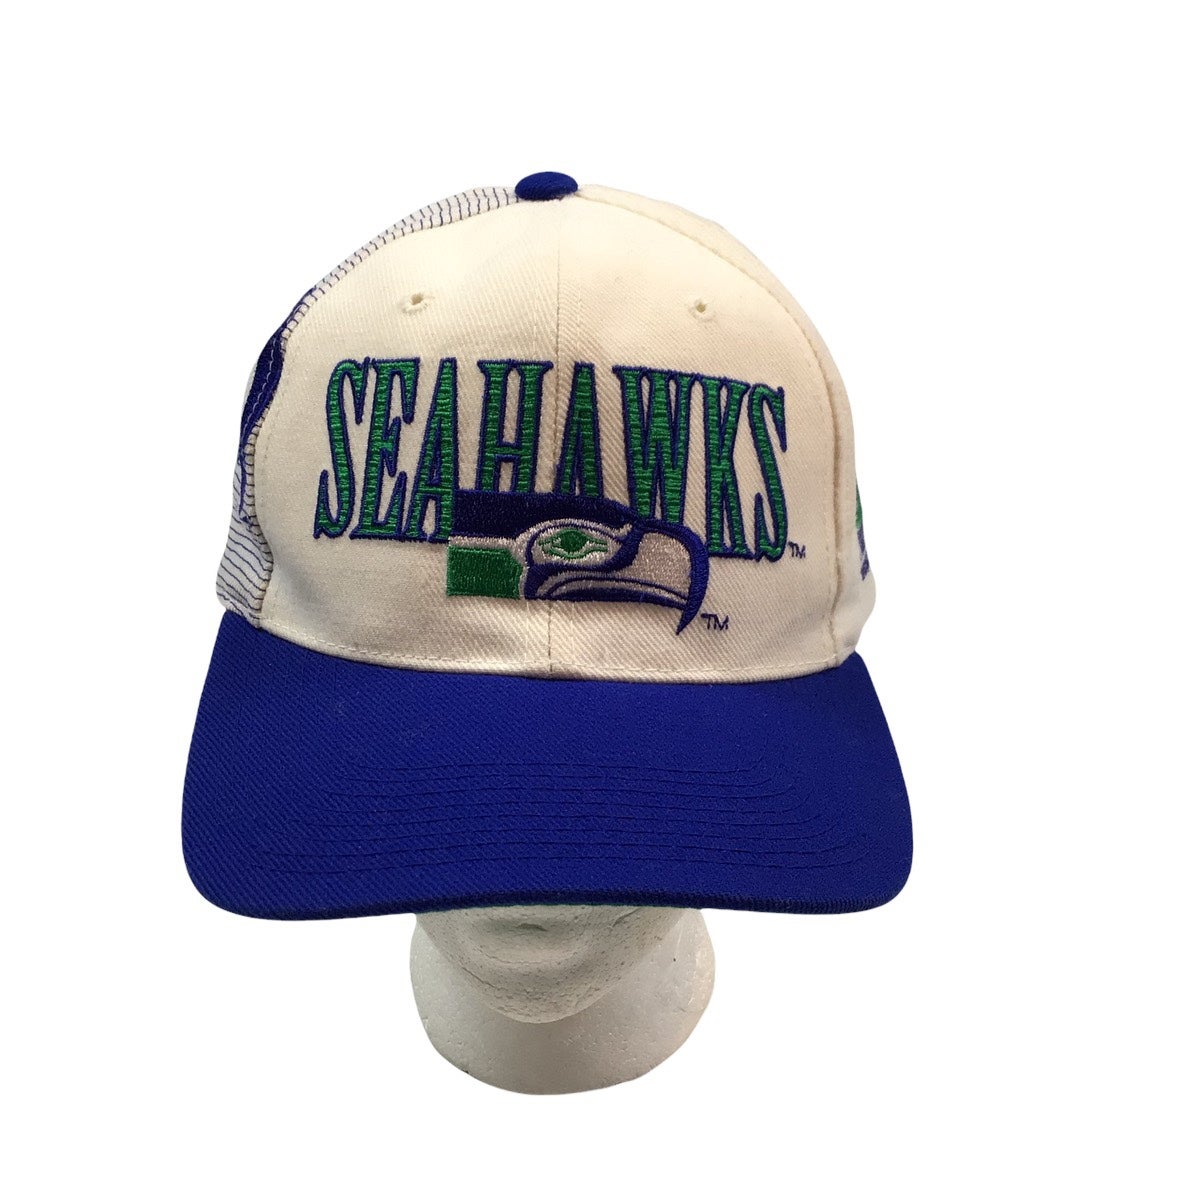 Vintage Seattle Seahawks NFL Sports Specialties snapback hat